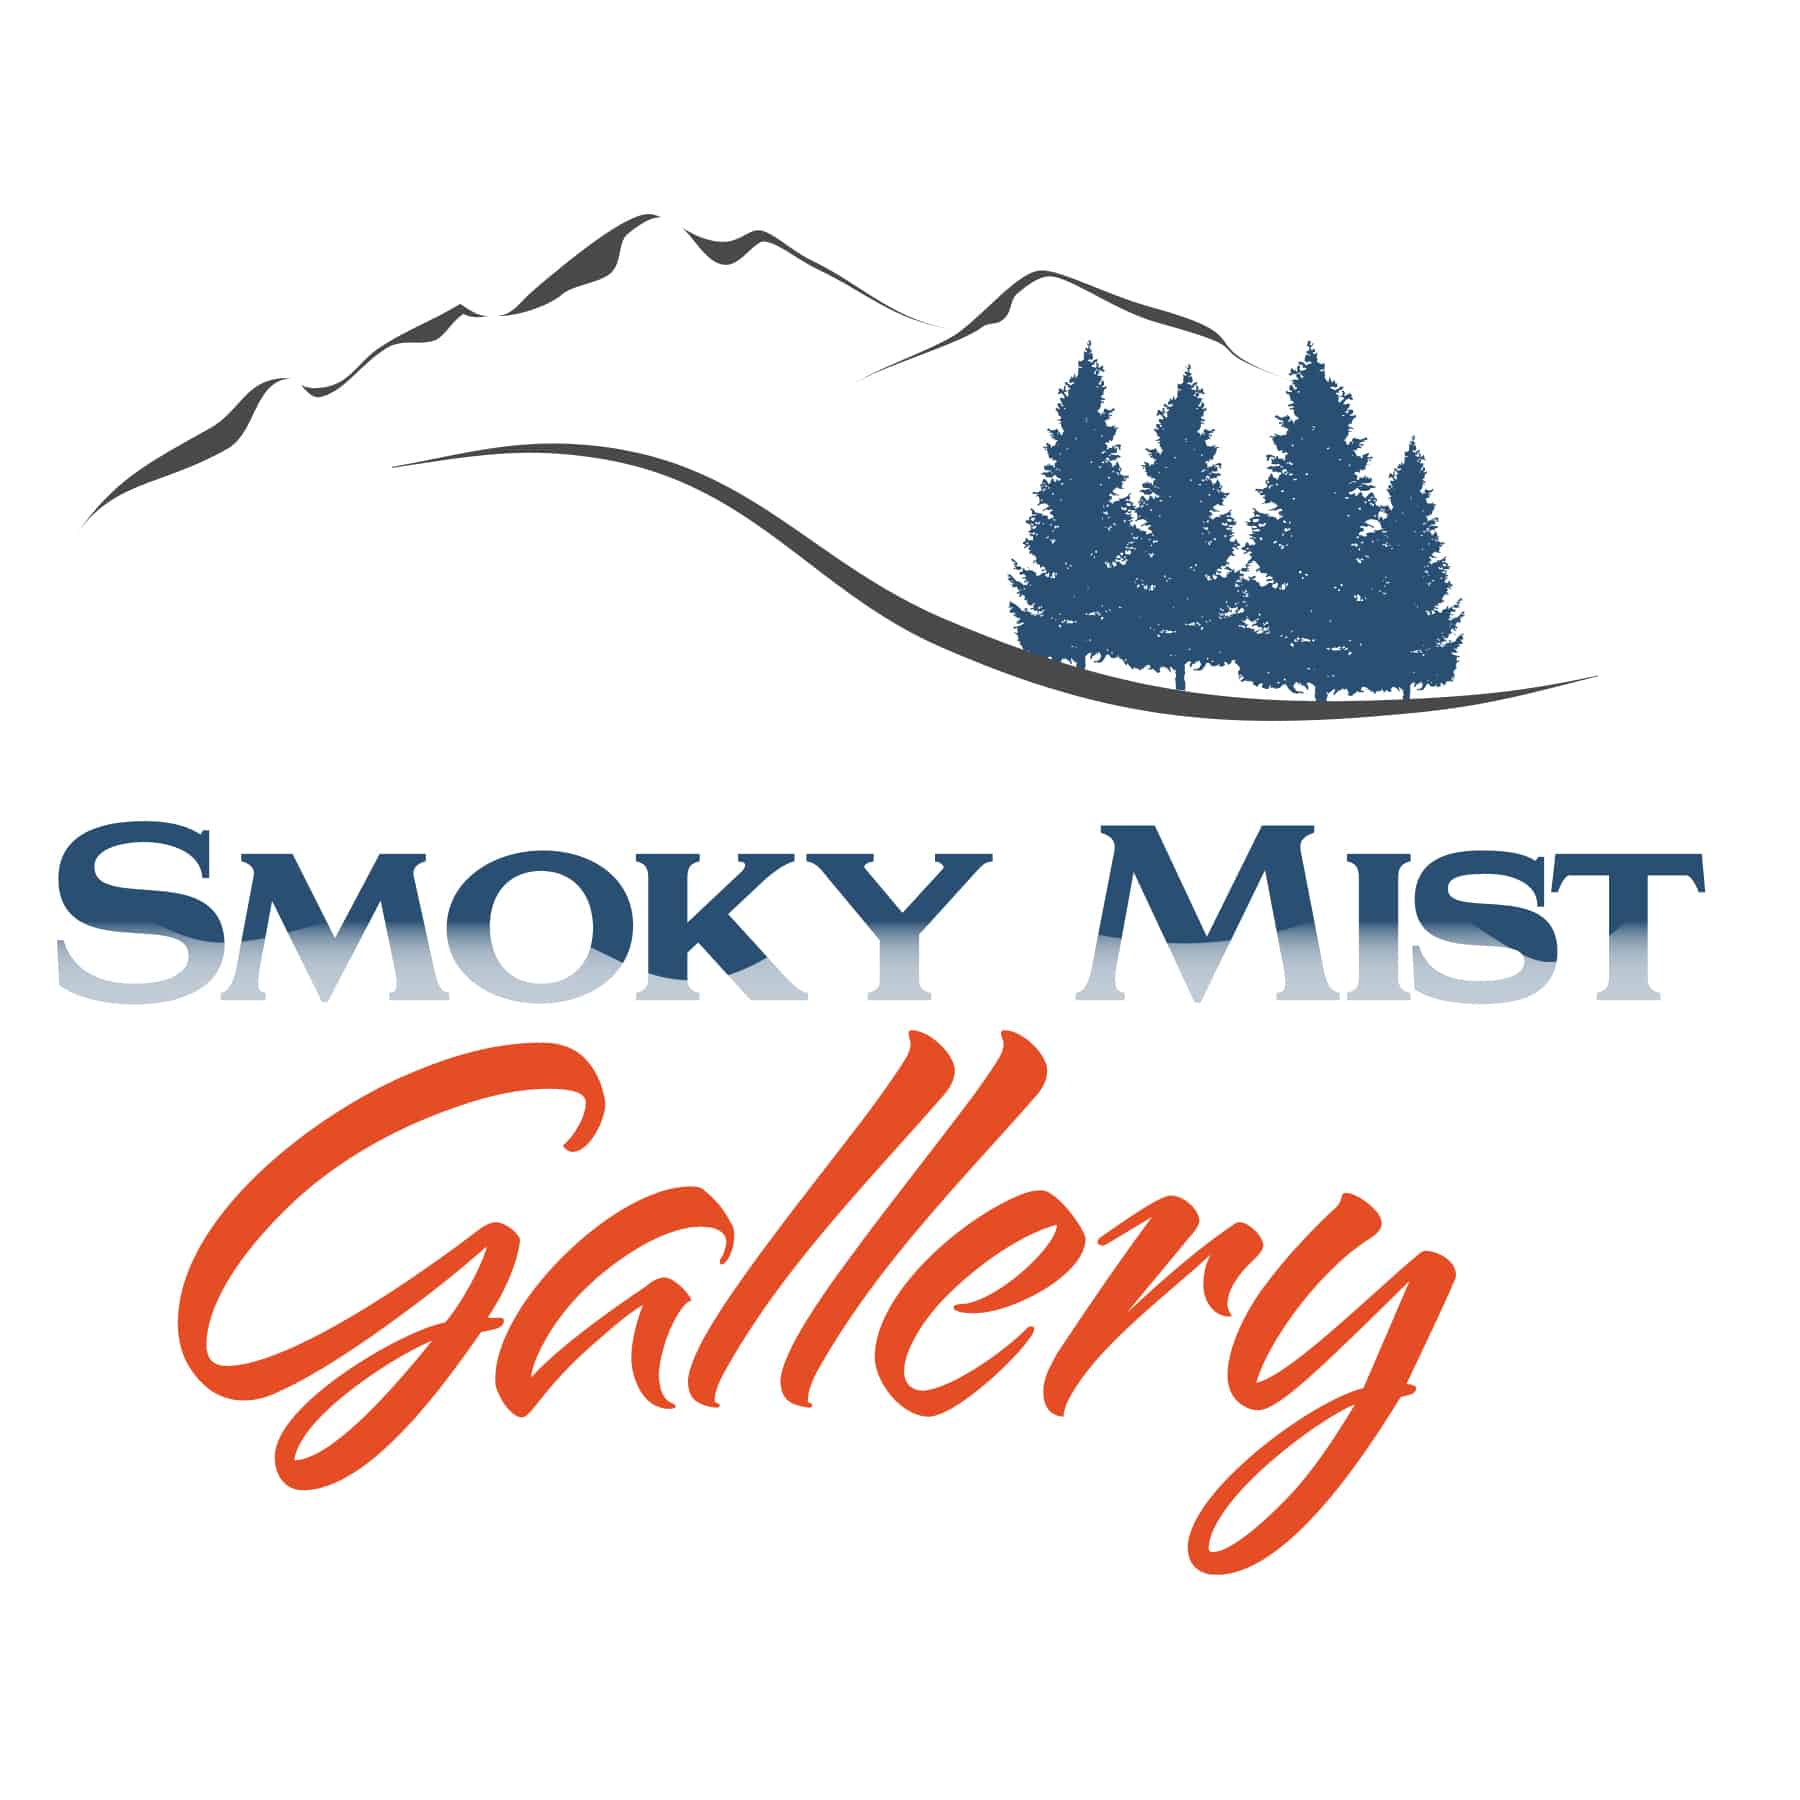 Smoky Mist Gallery